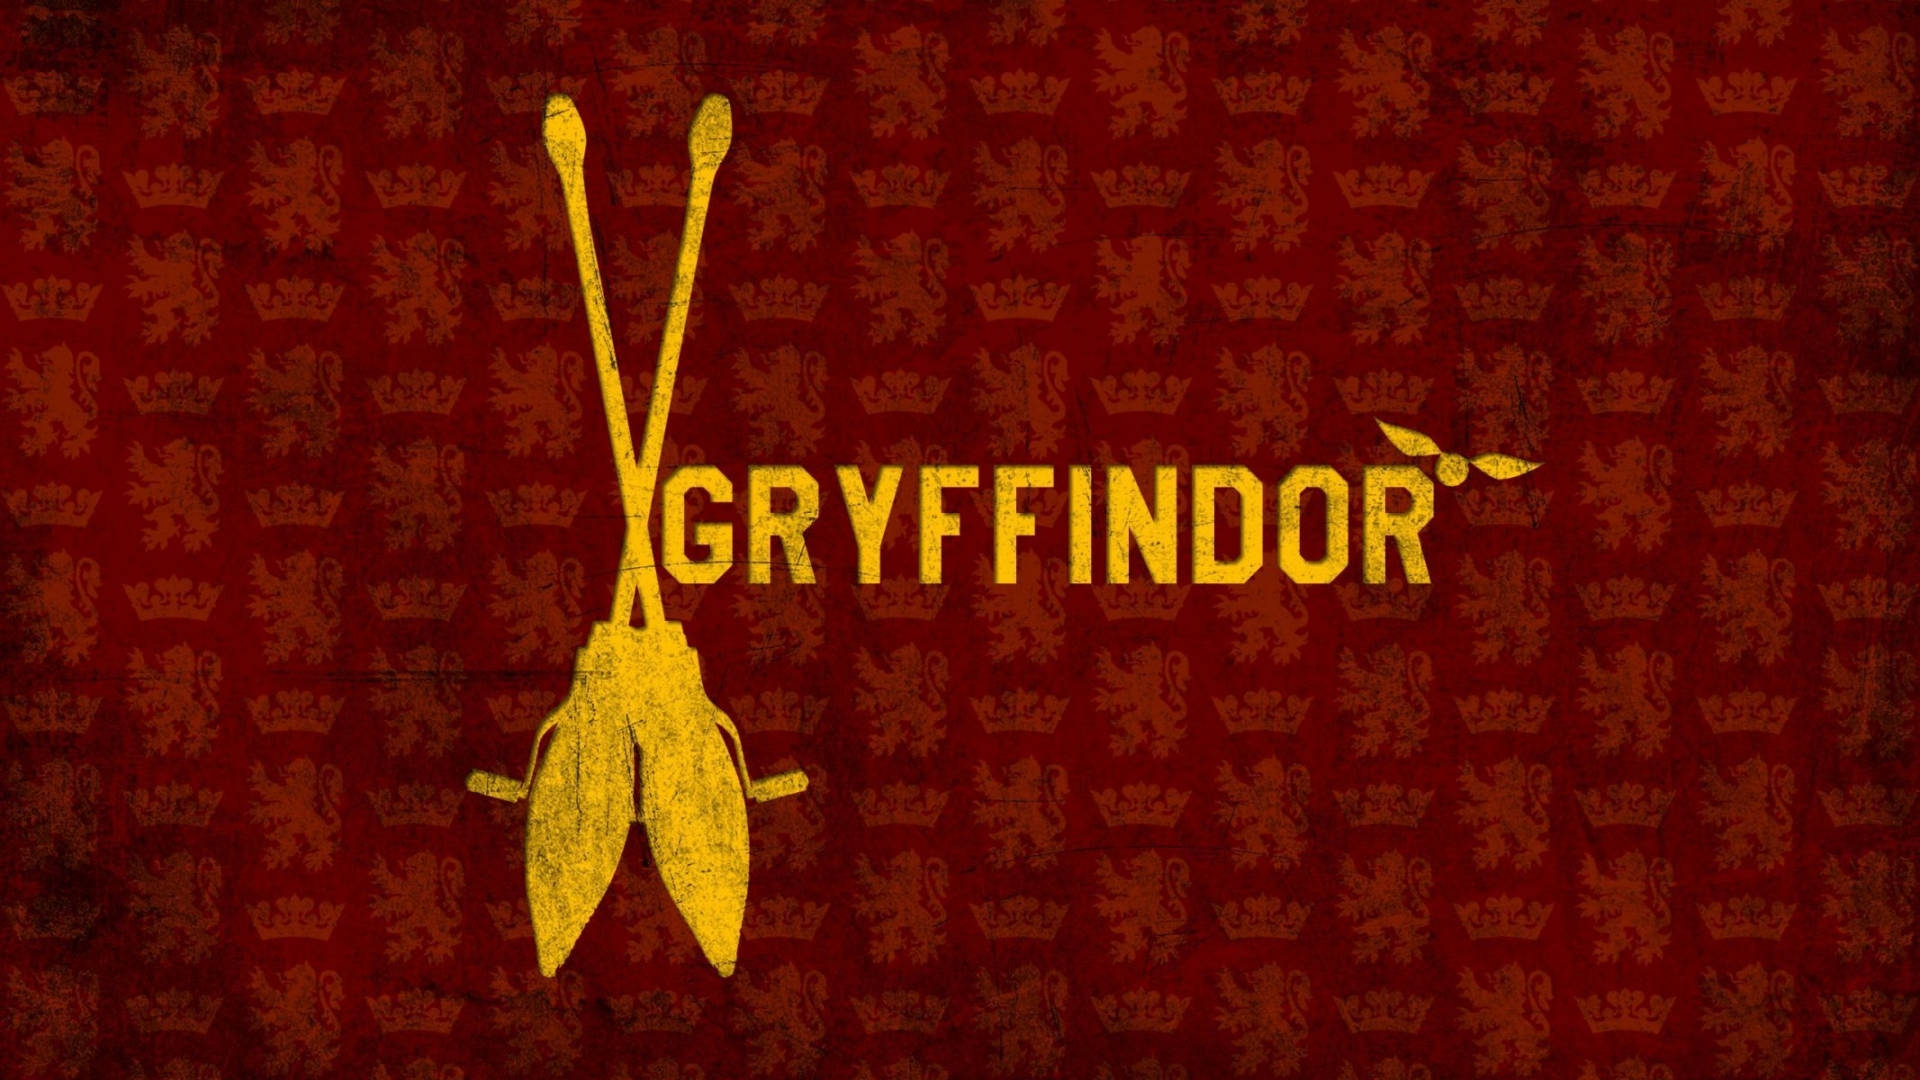 Harry Potter Houses Gryffindor Quidditch Wallpaper